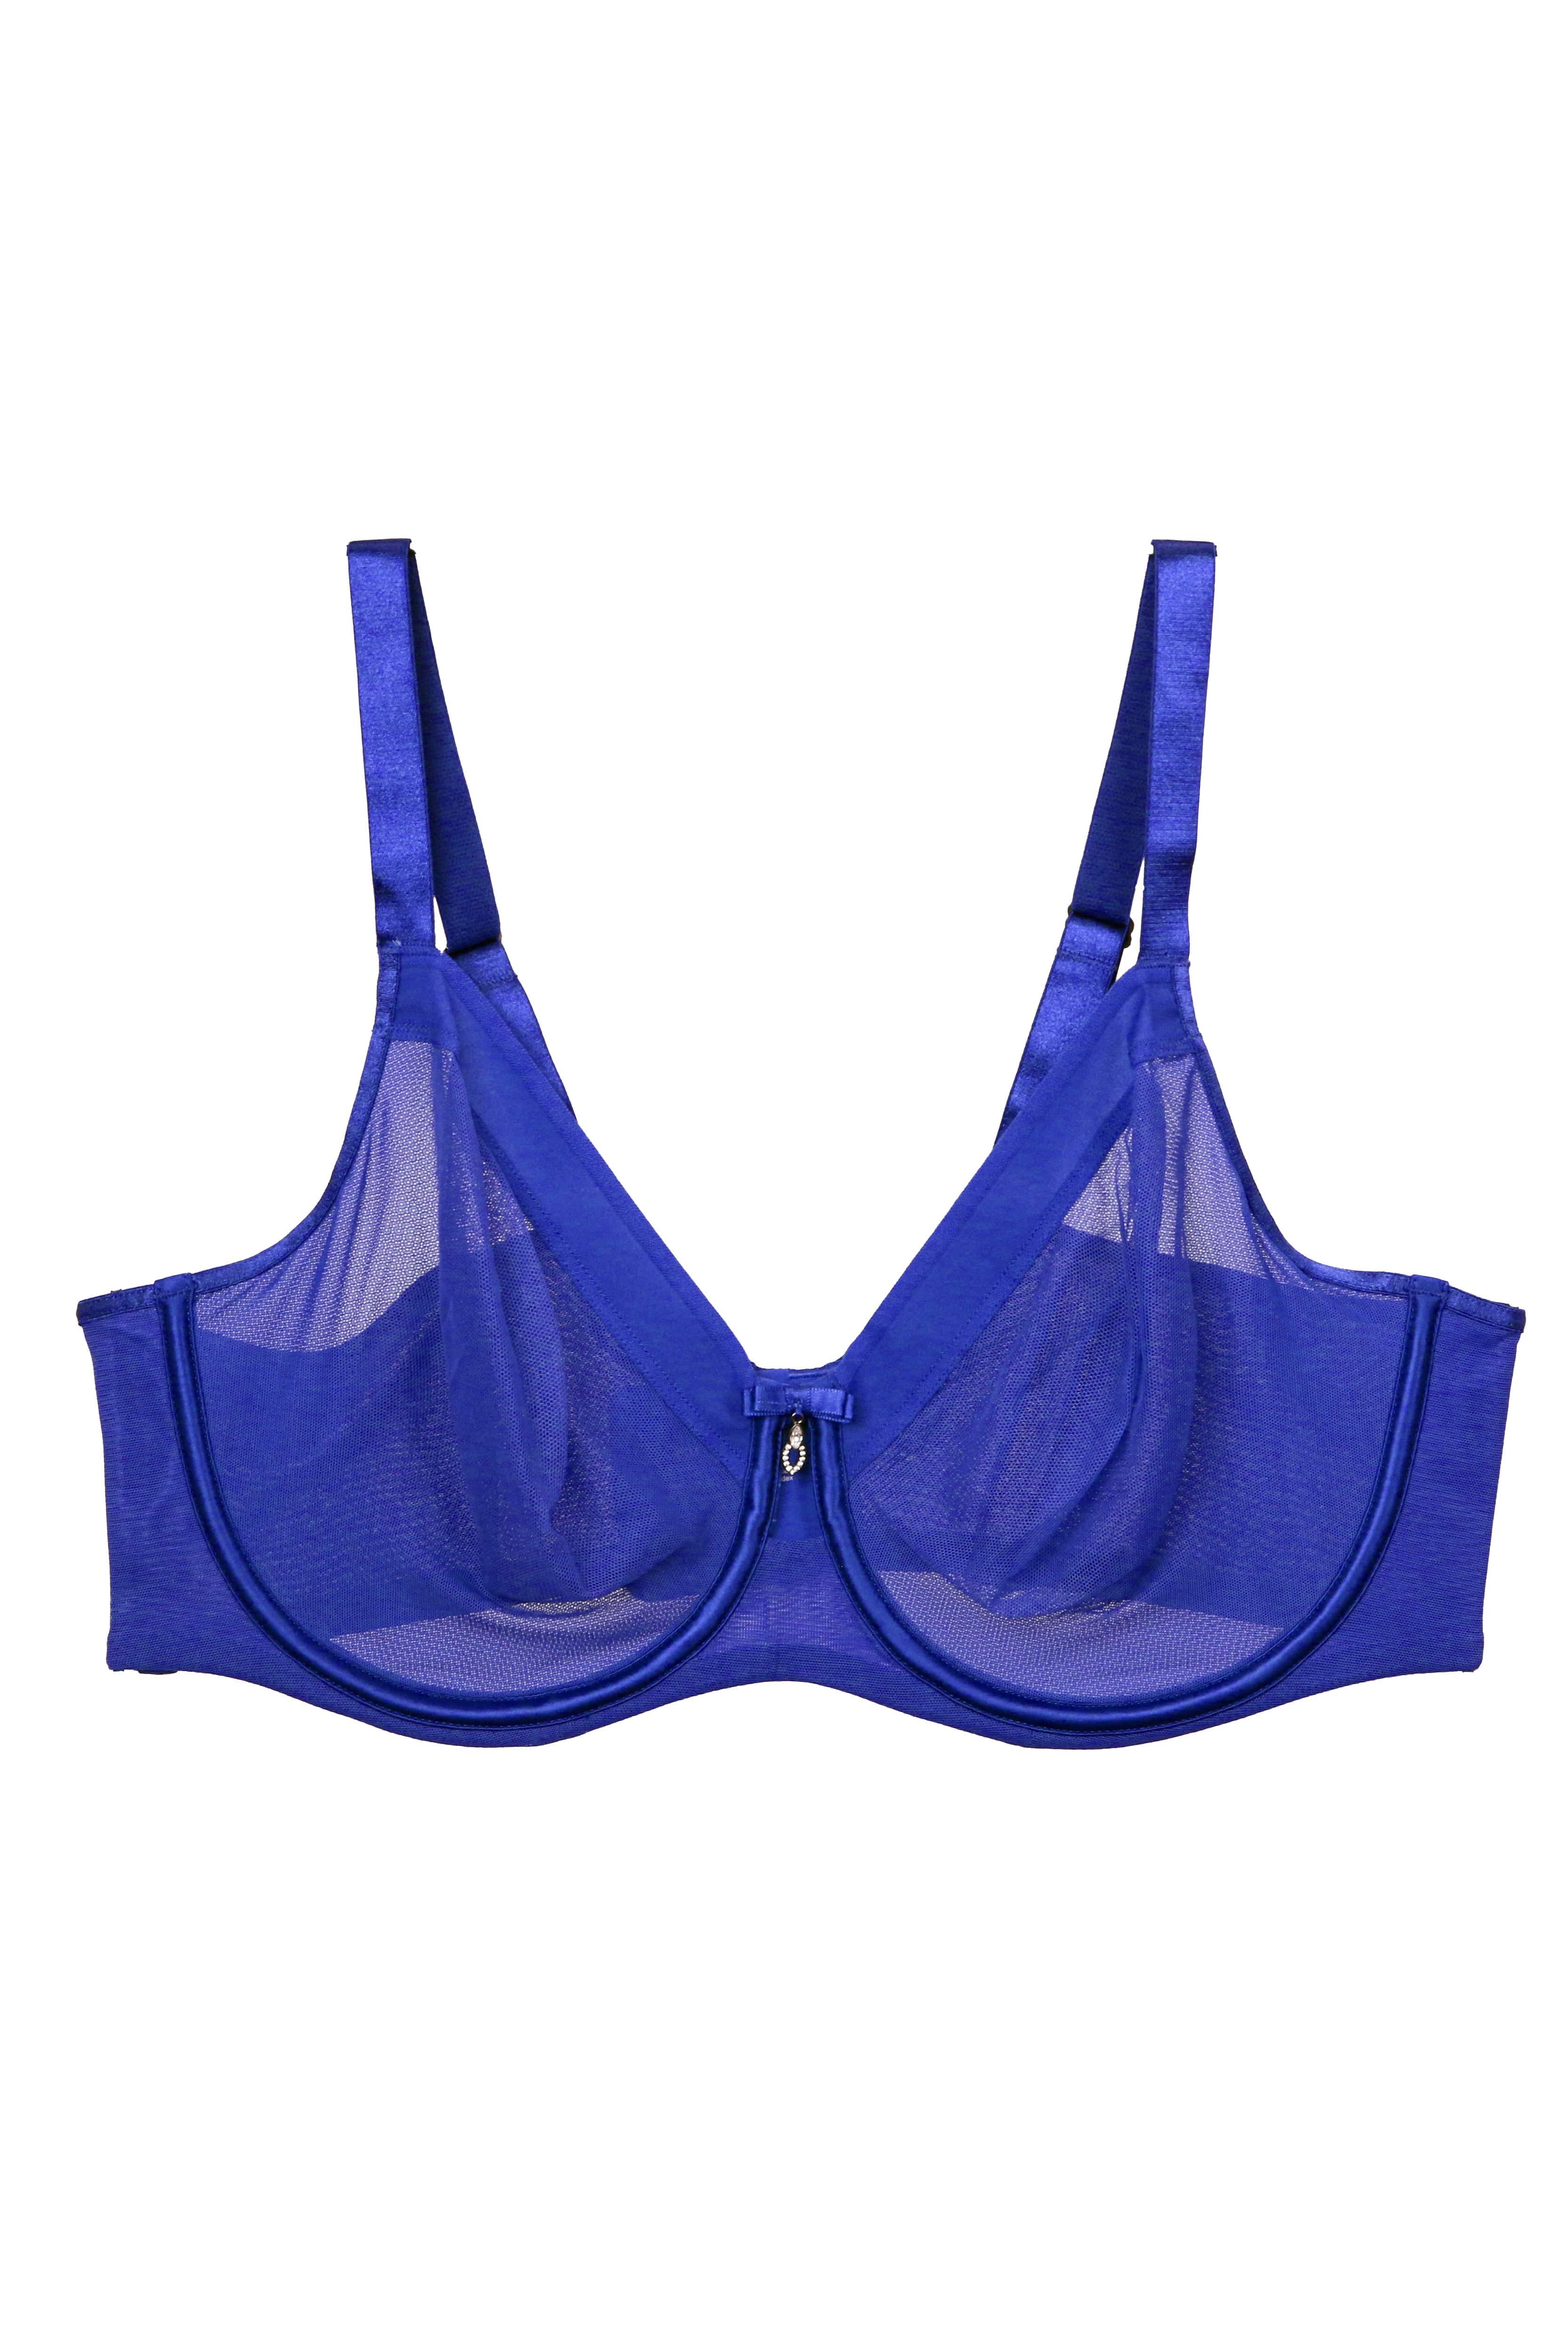 Besired Candice Balconette Bra in Blue Size 36C : : Fashion